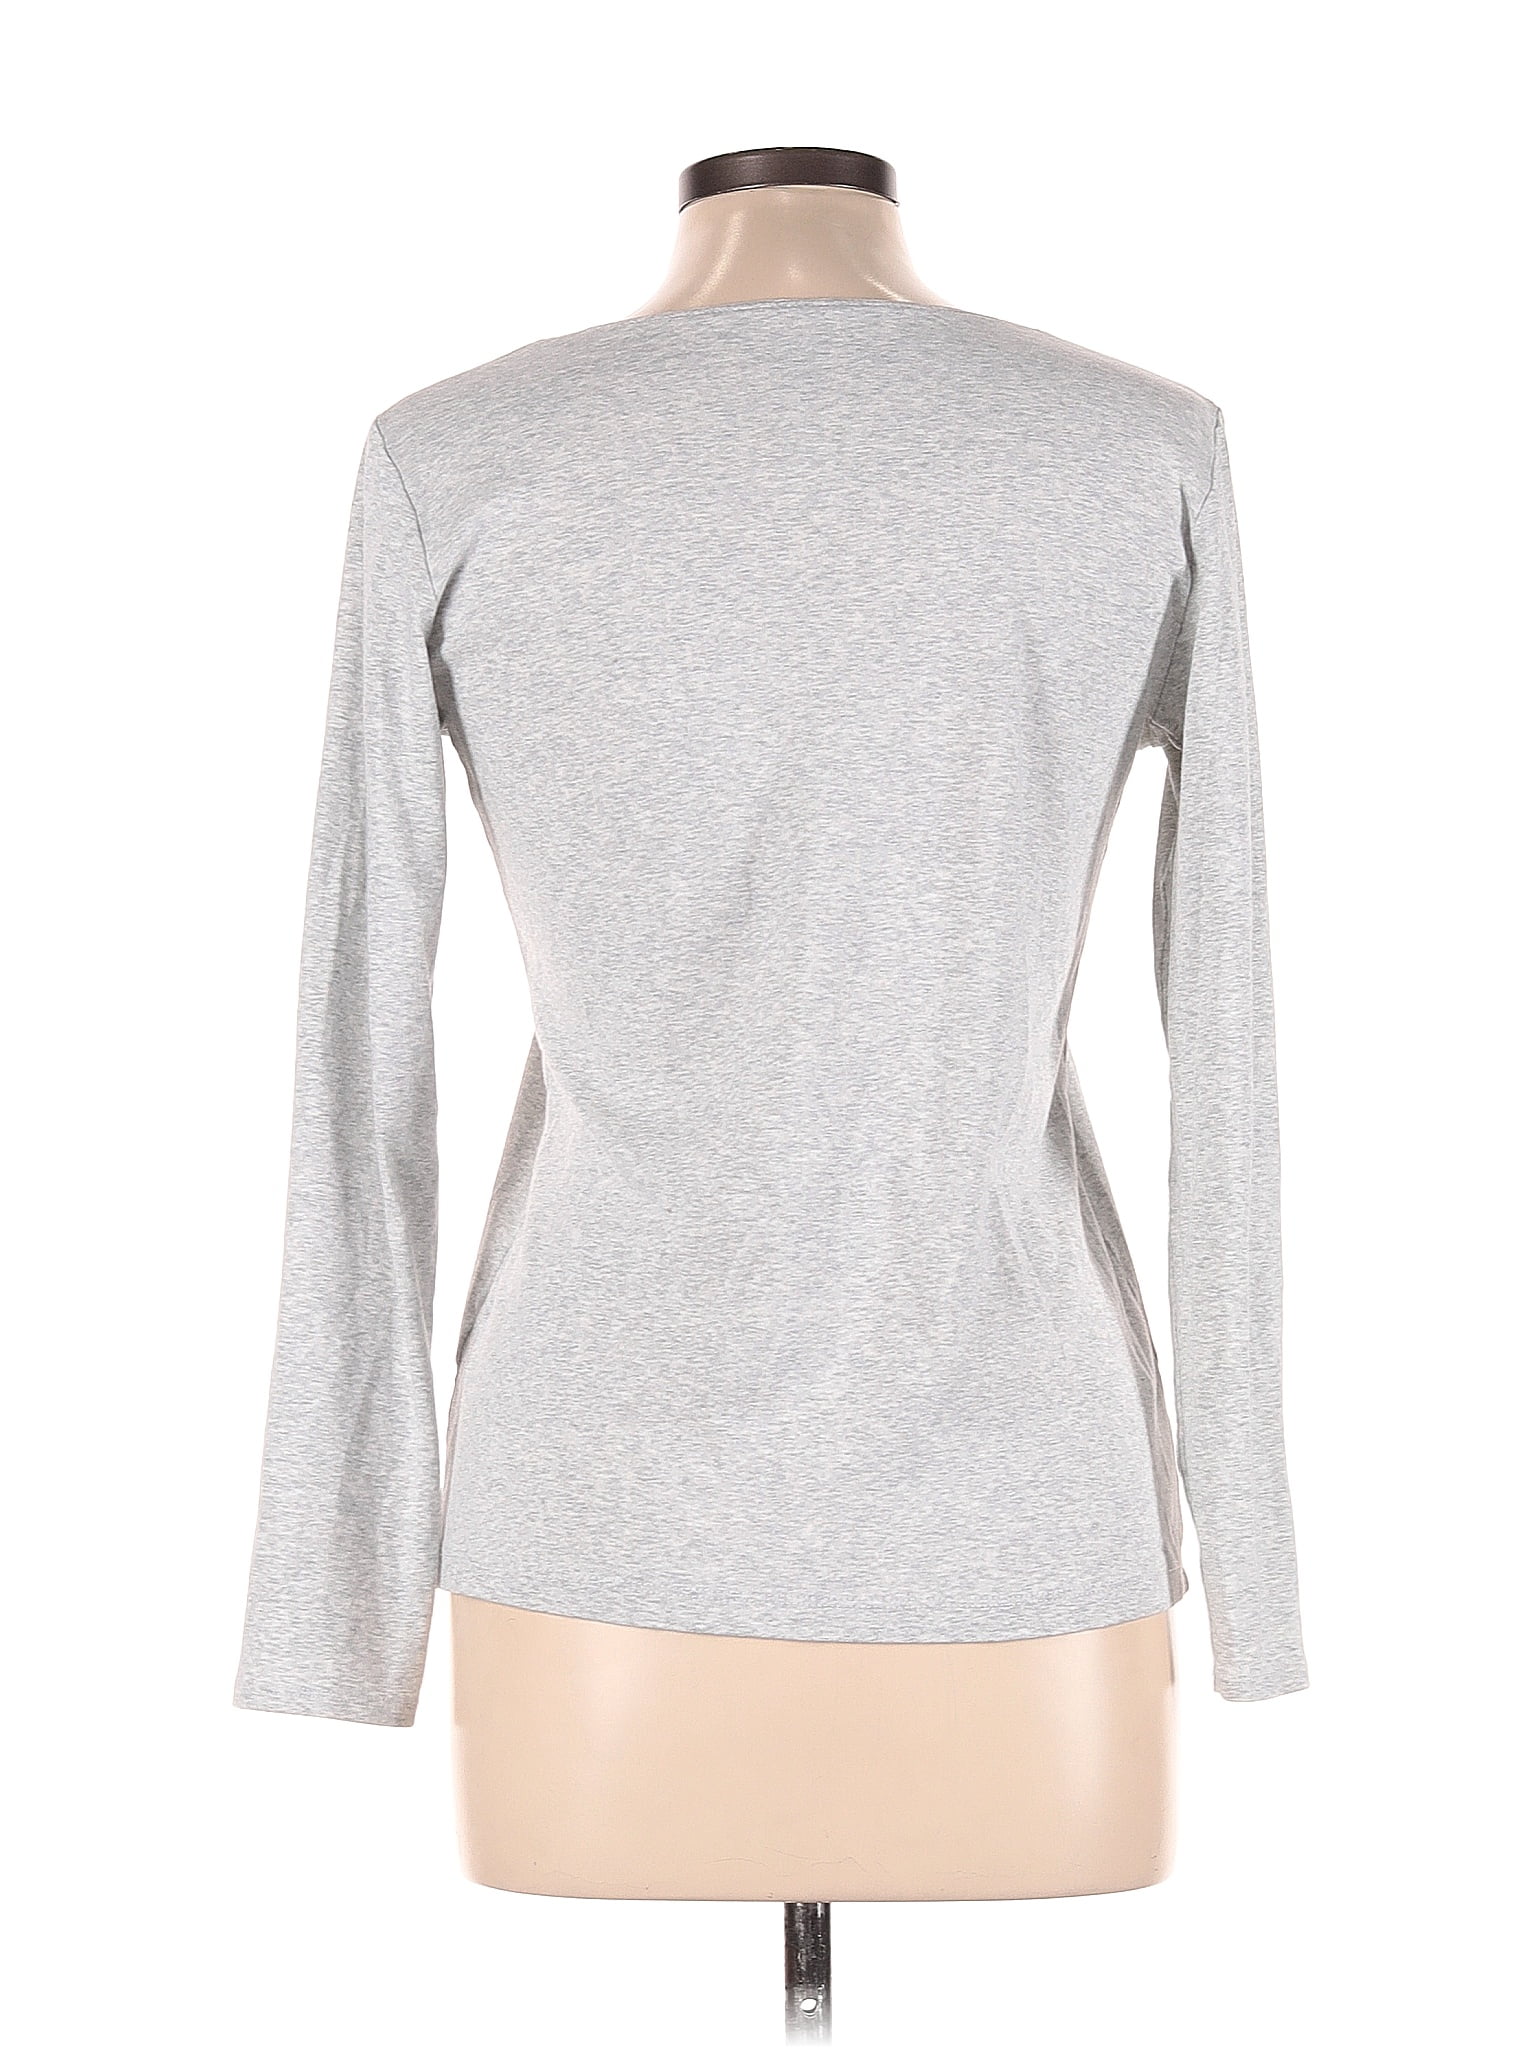 J.Jill Marled Gray Long Sleeve T-Shirt Size 4X (Plus) - 35% off